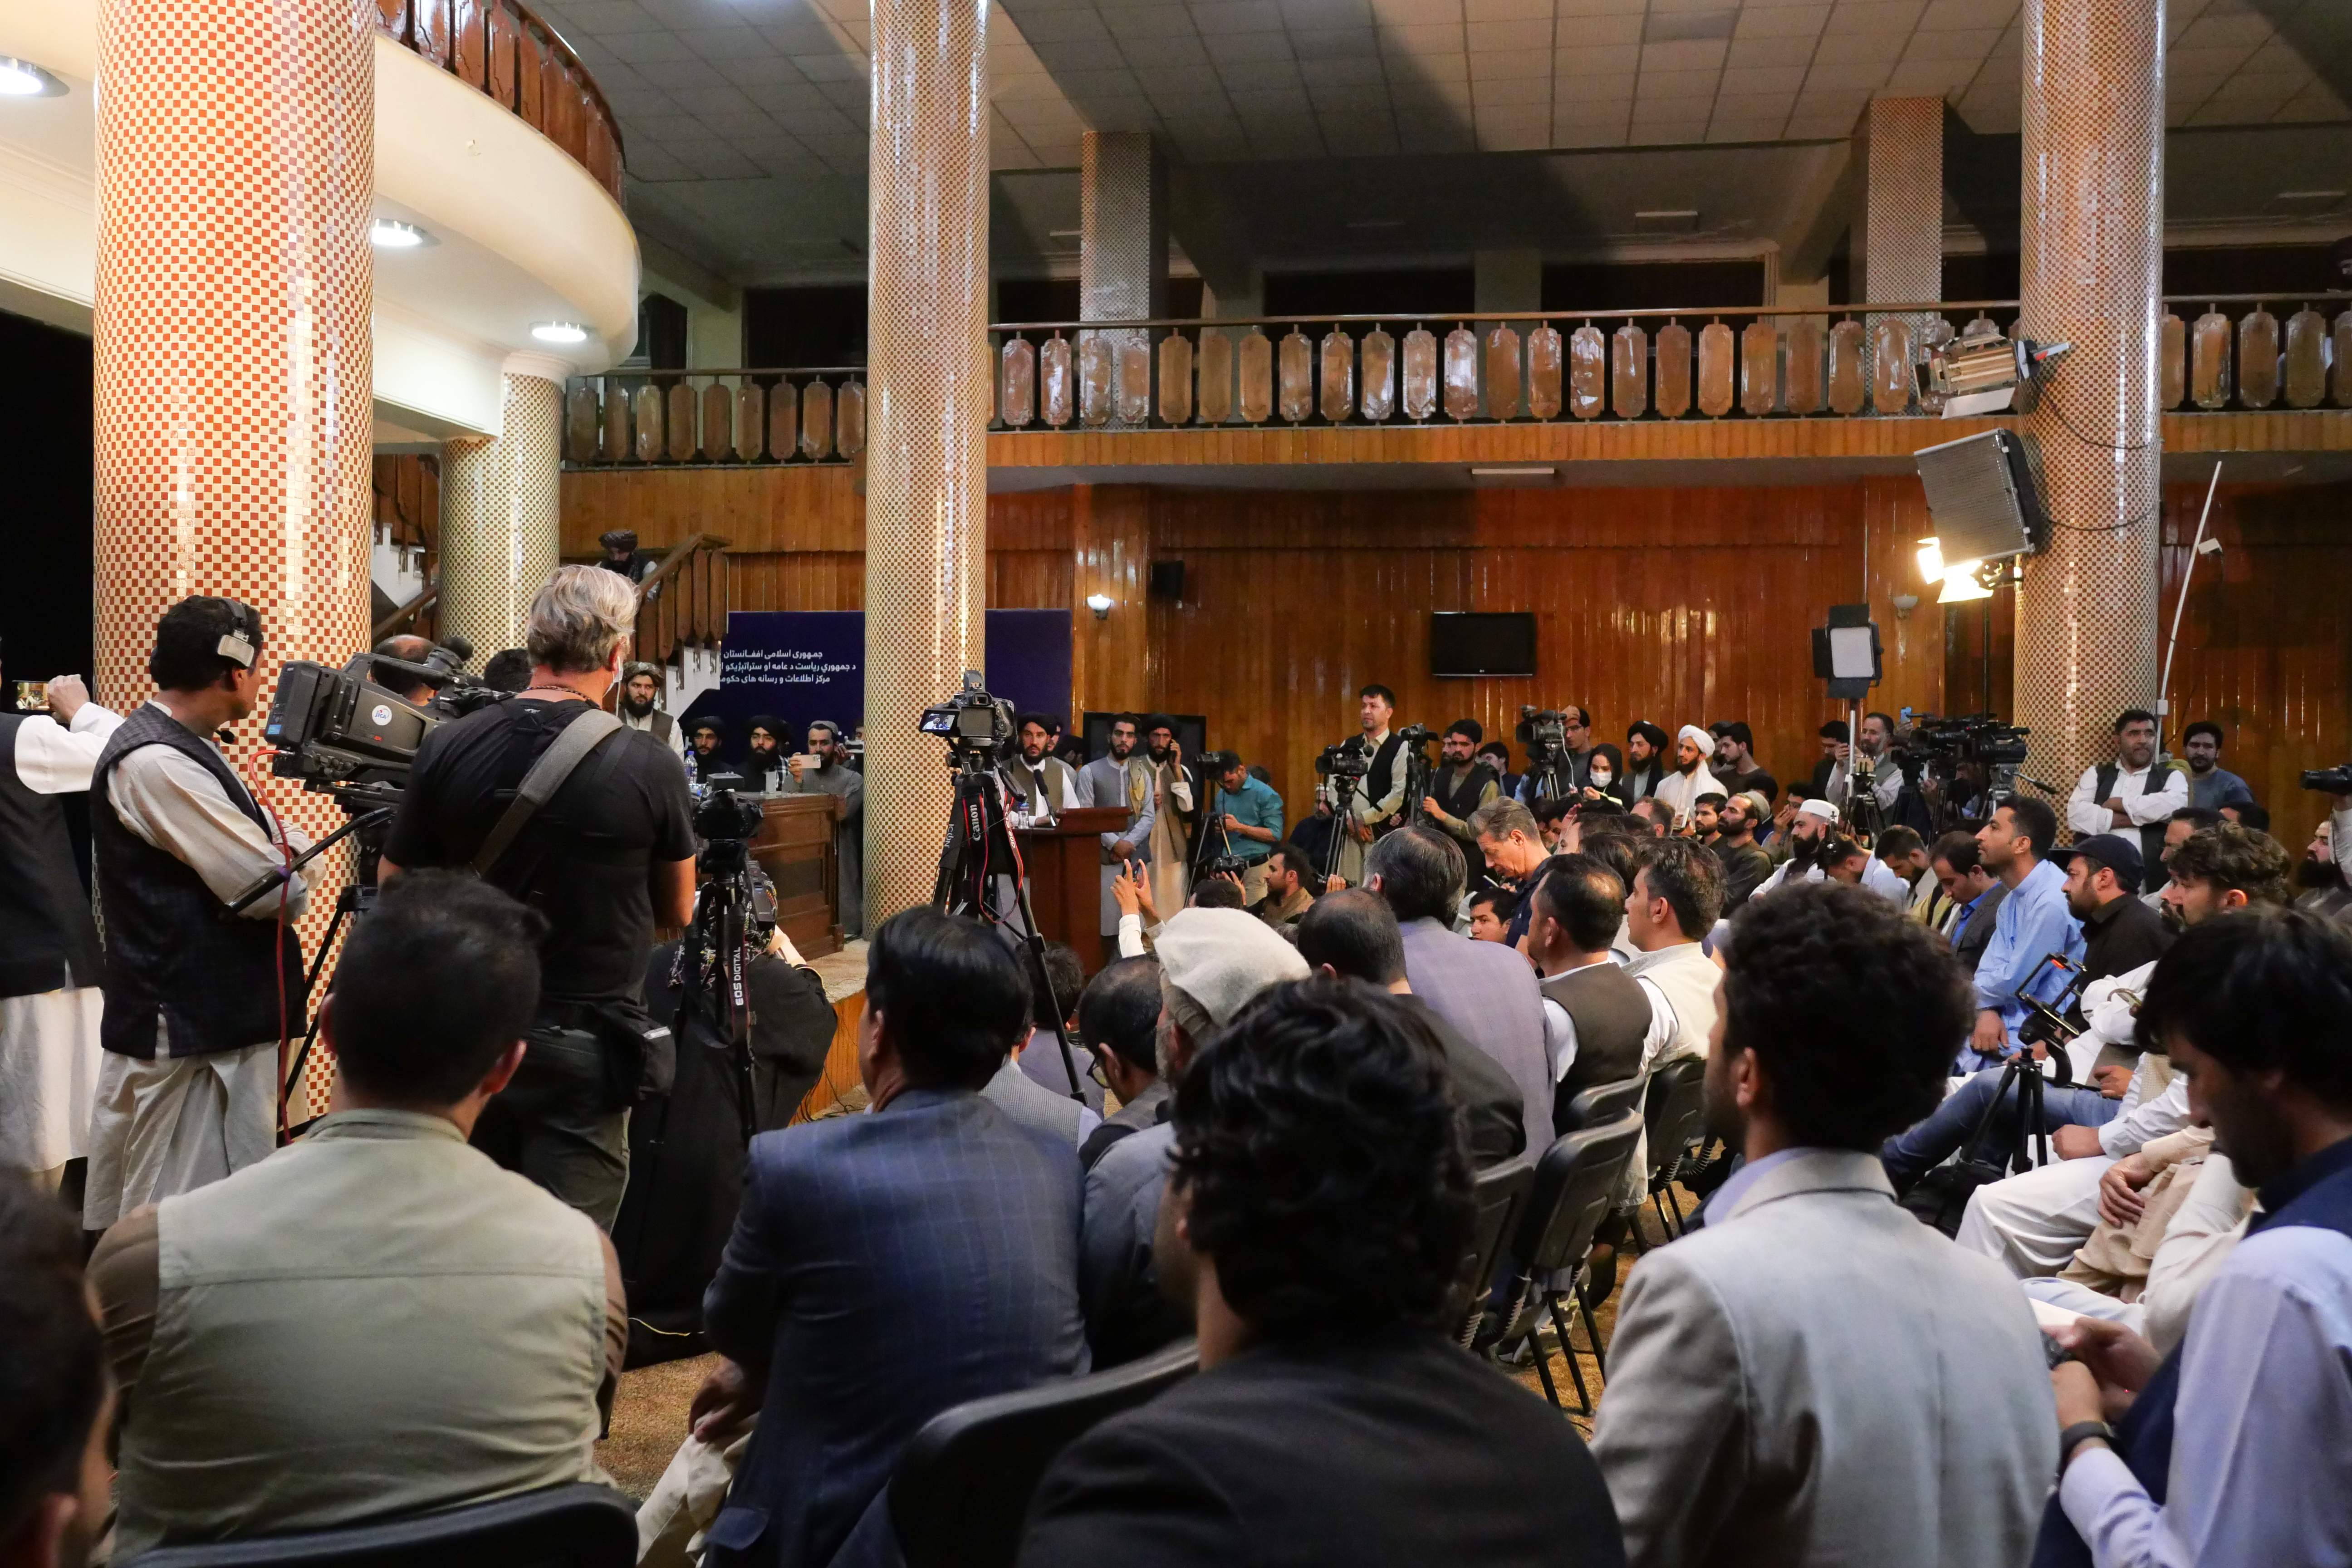 cf-taliban-press-conference-002_edit.jpg